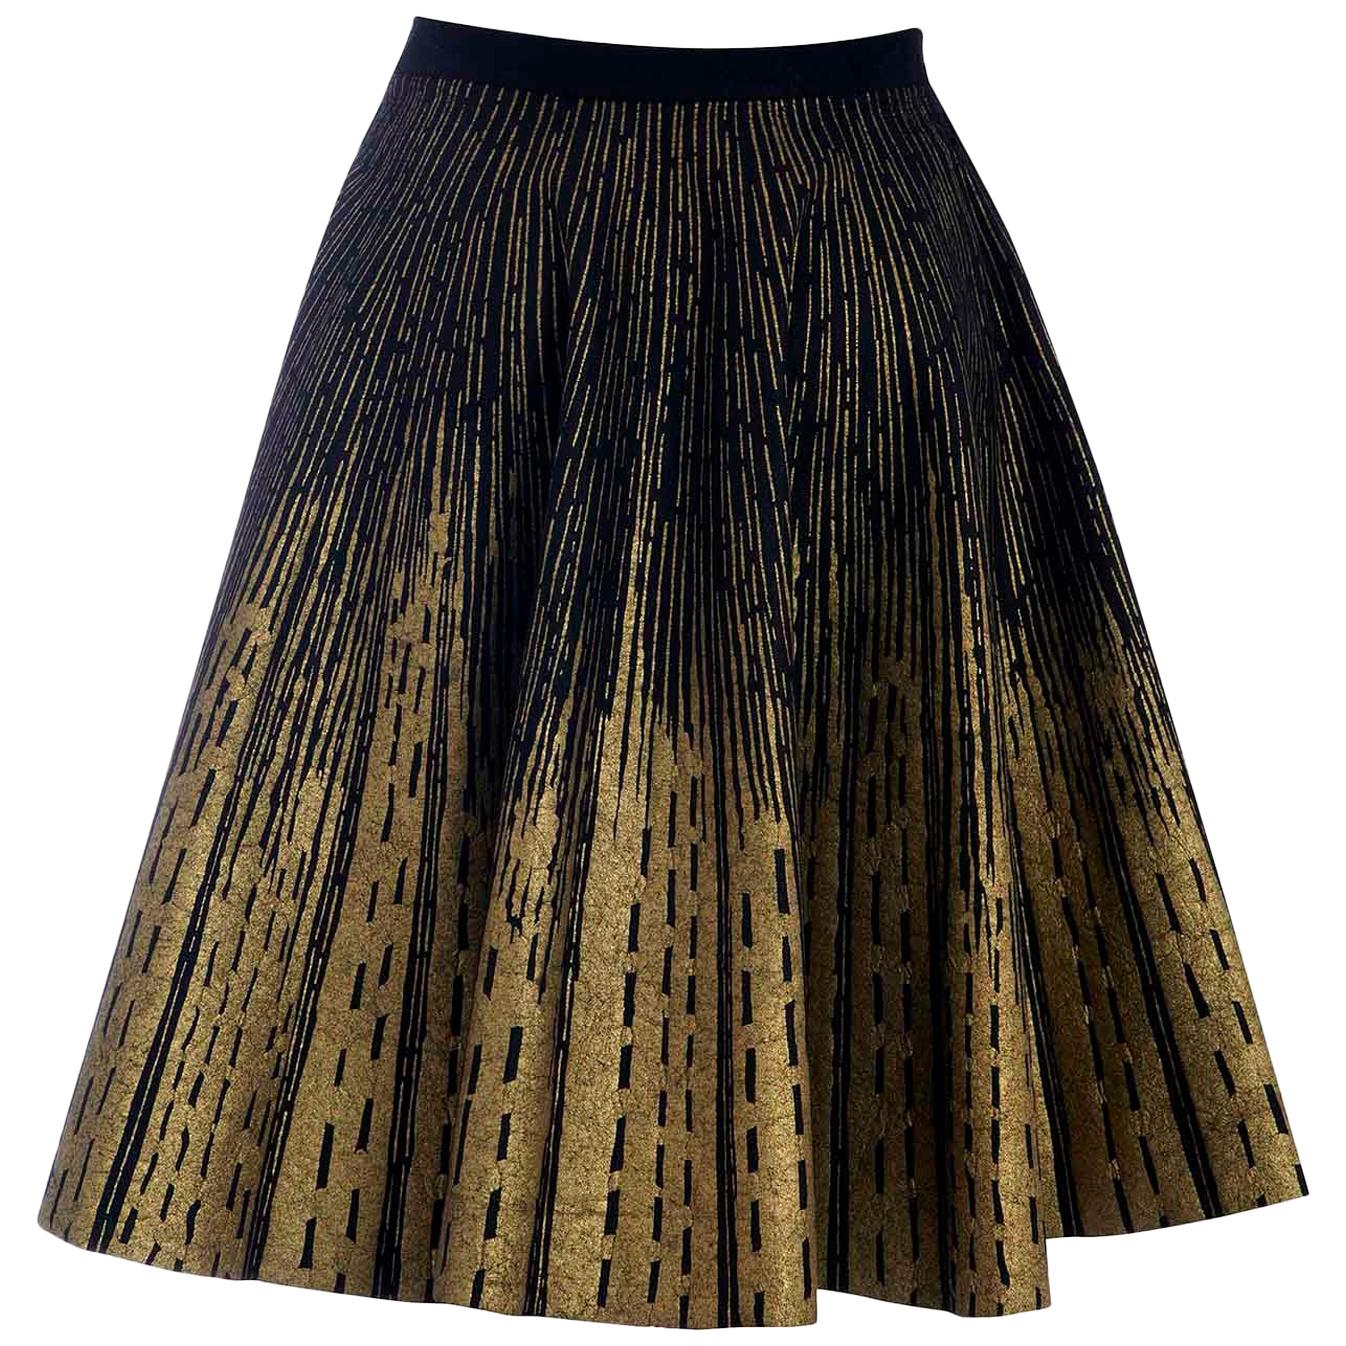 Vintage 1950s Gold Foil & Felt Wool Circle Skirt